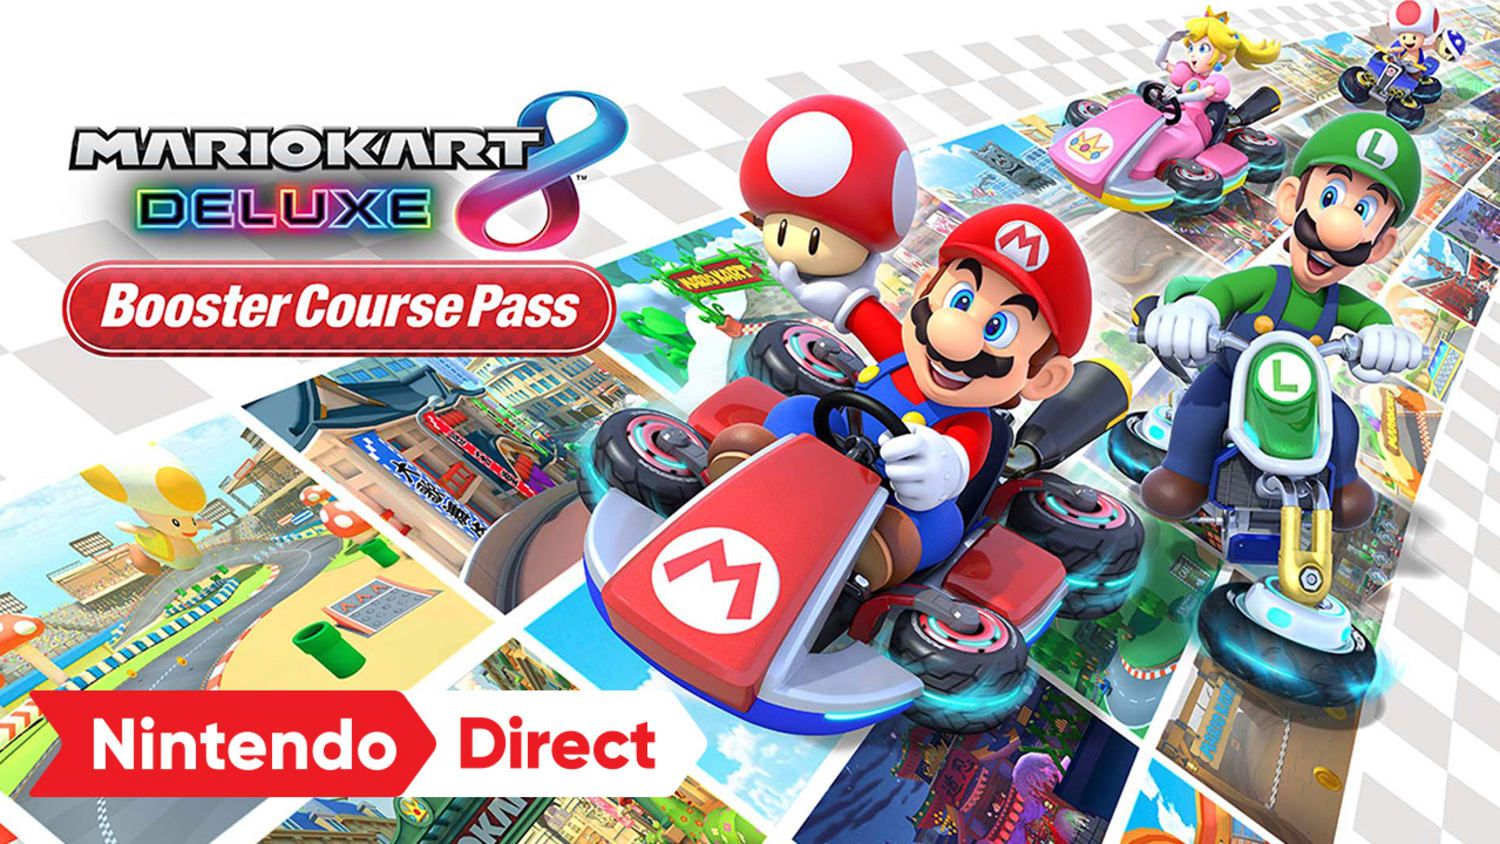 Mario Kart Tour Will Stop Receiving New Content After October 2023